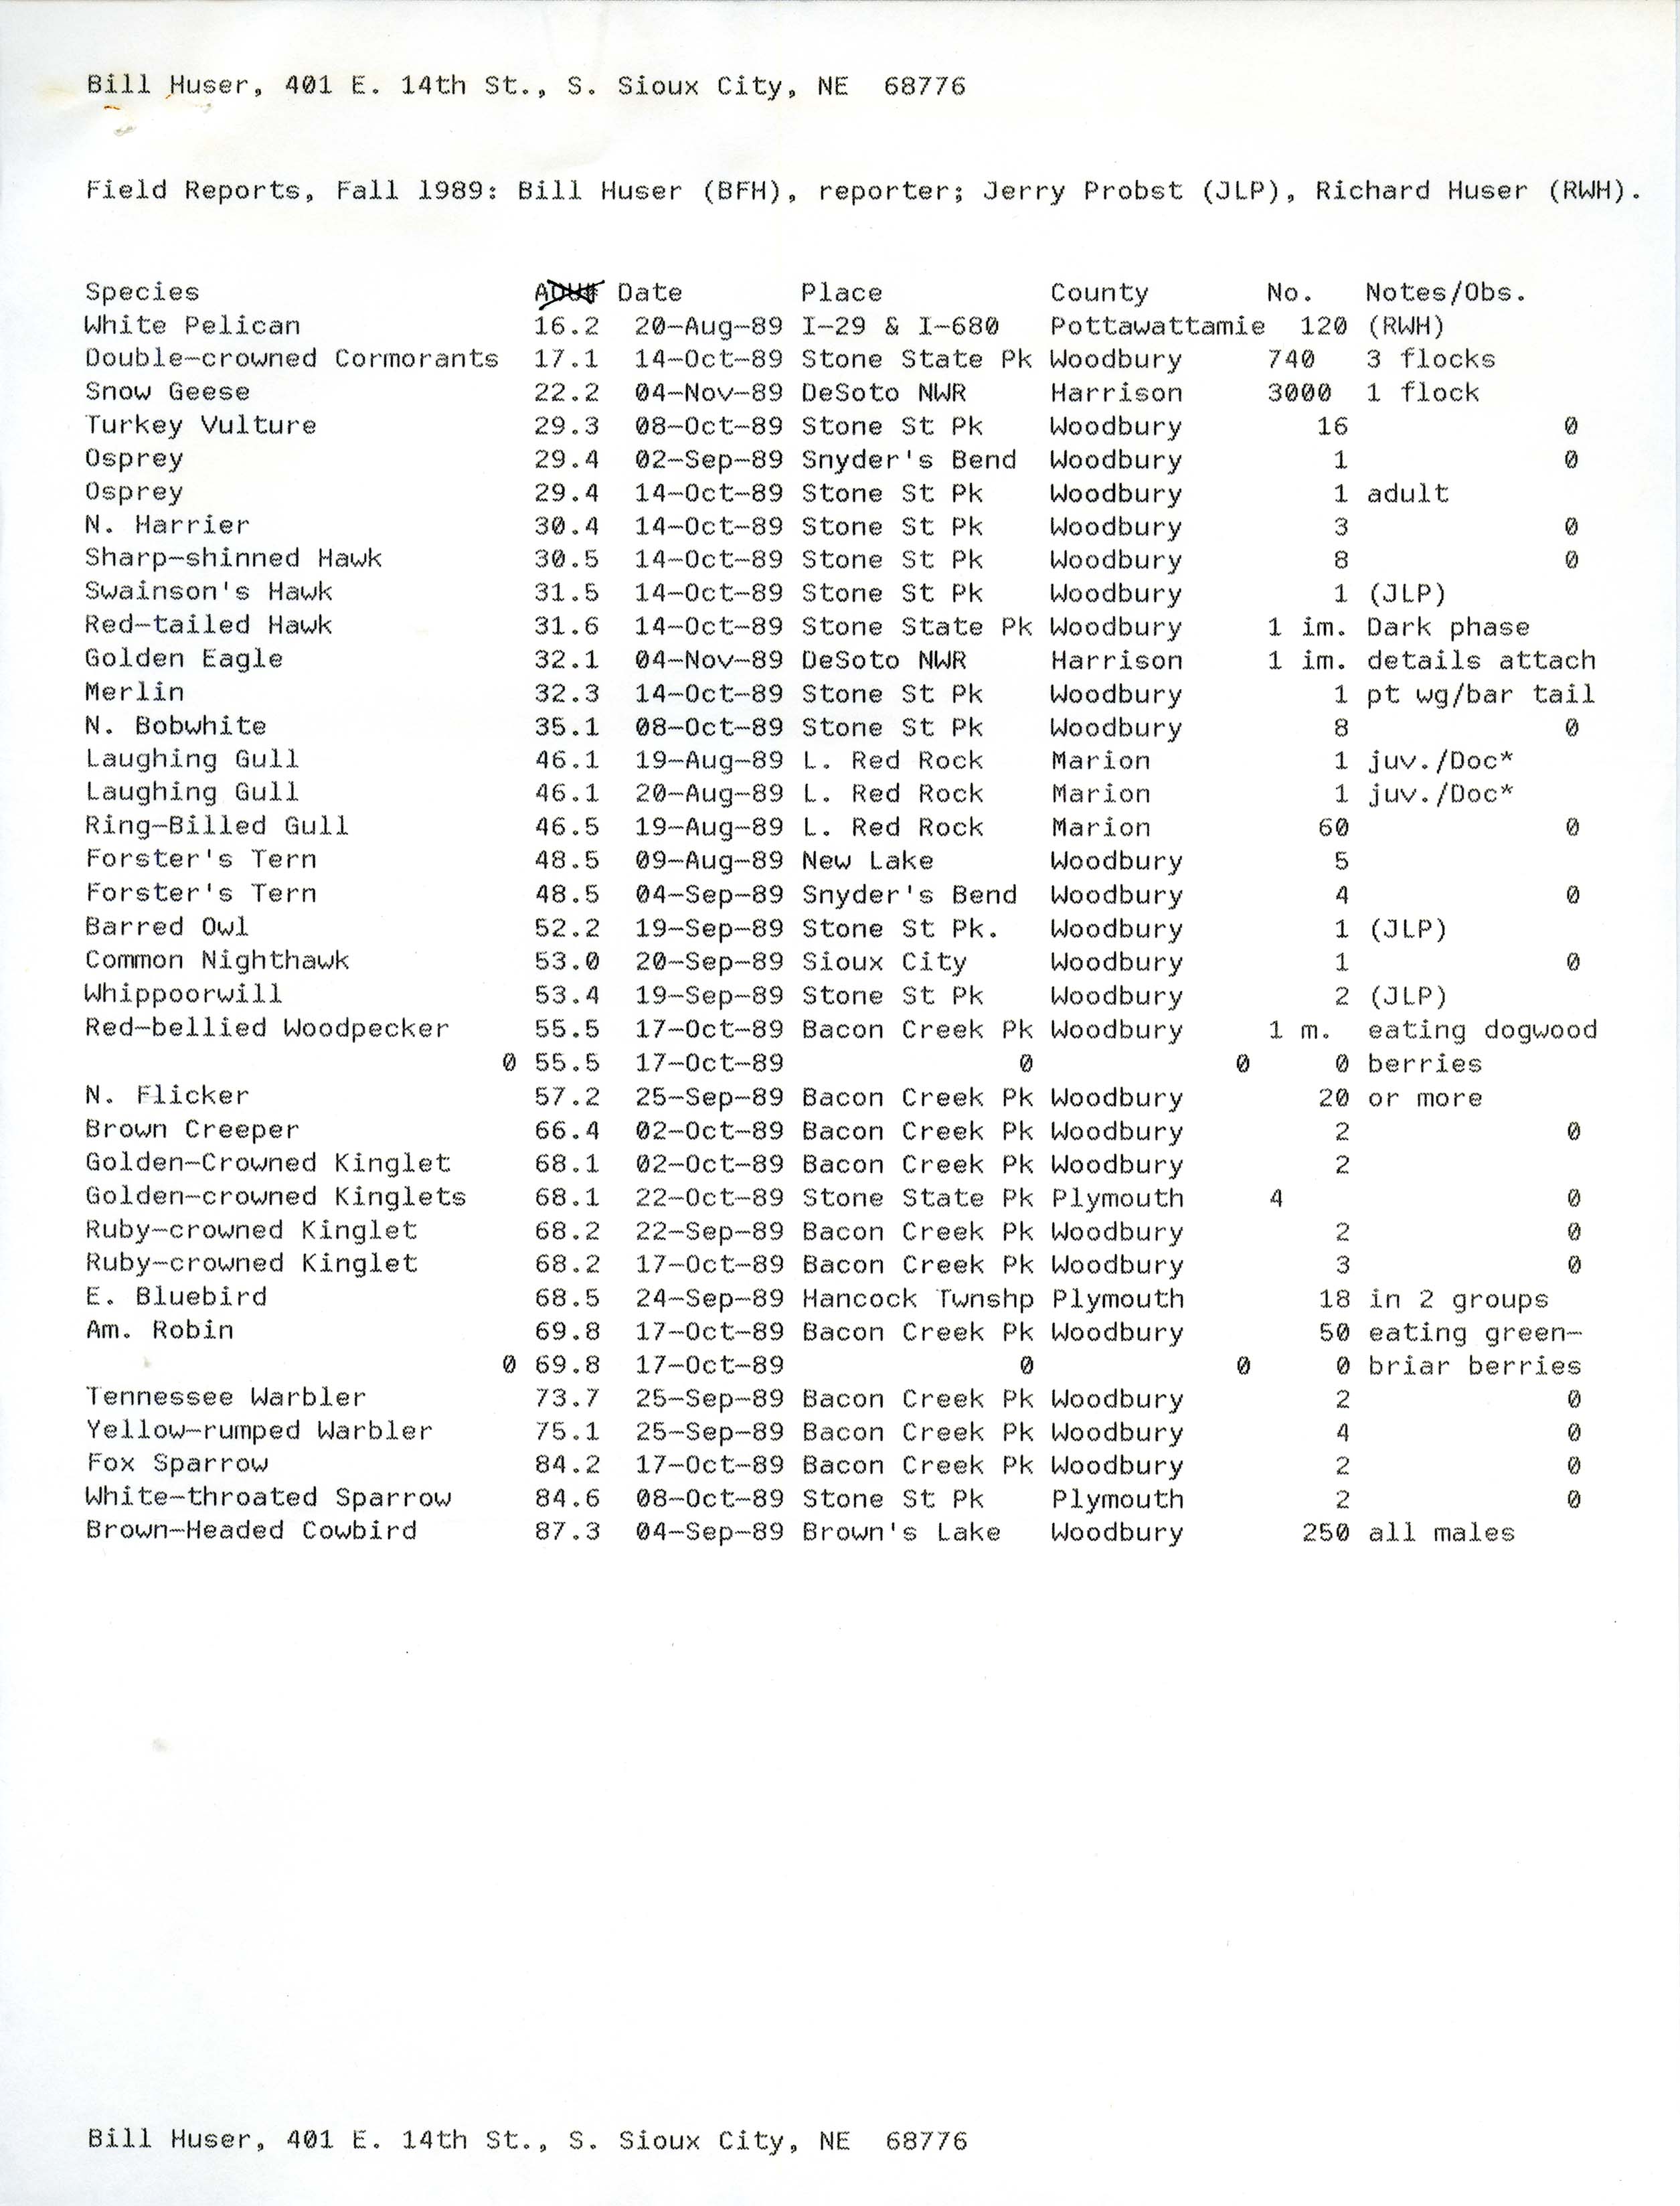 Field reports, Bill Huser, Jerry Probst, Richard Huser, fall 1989